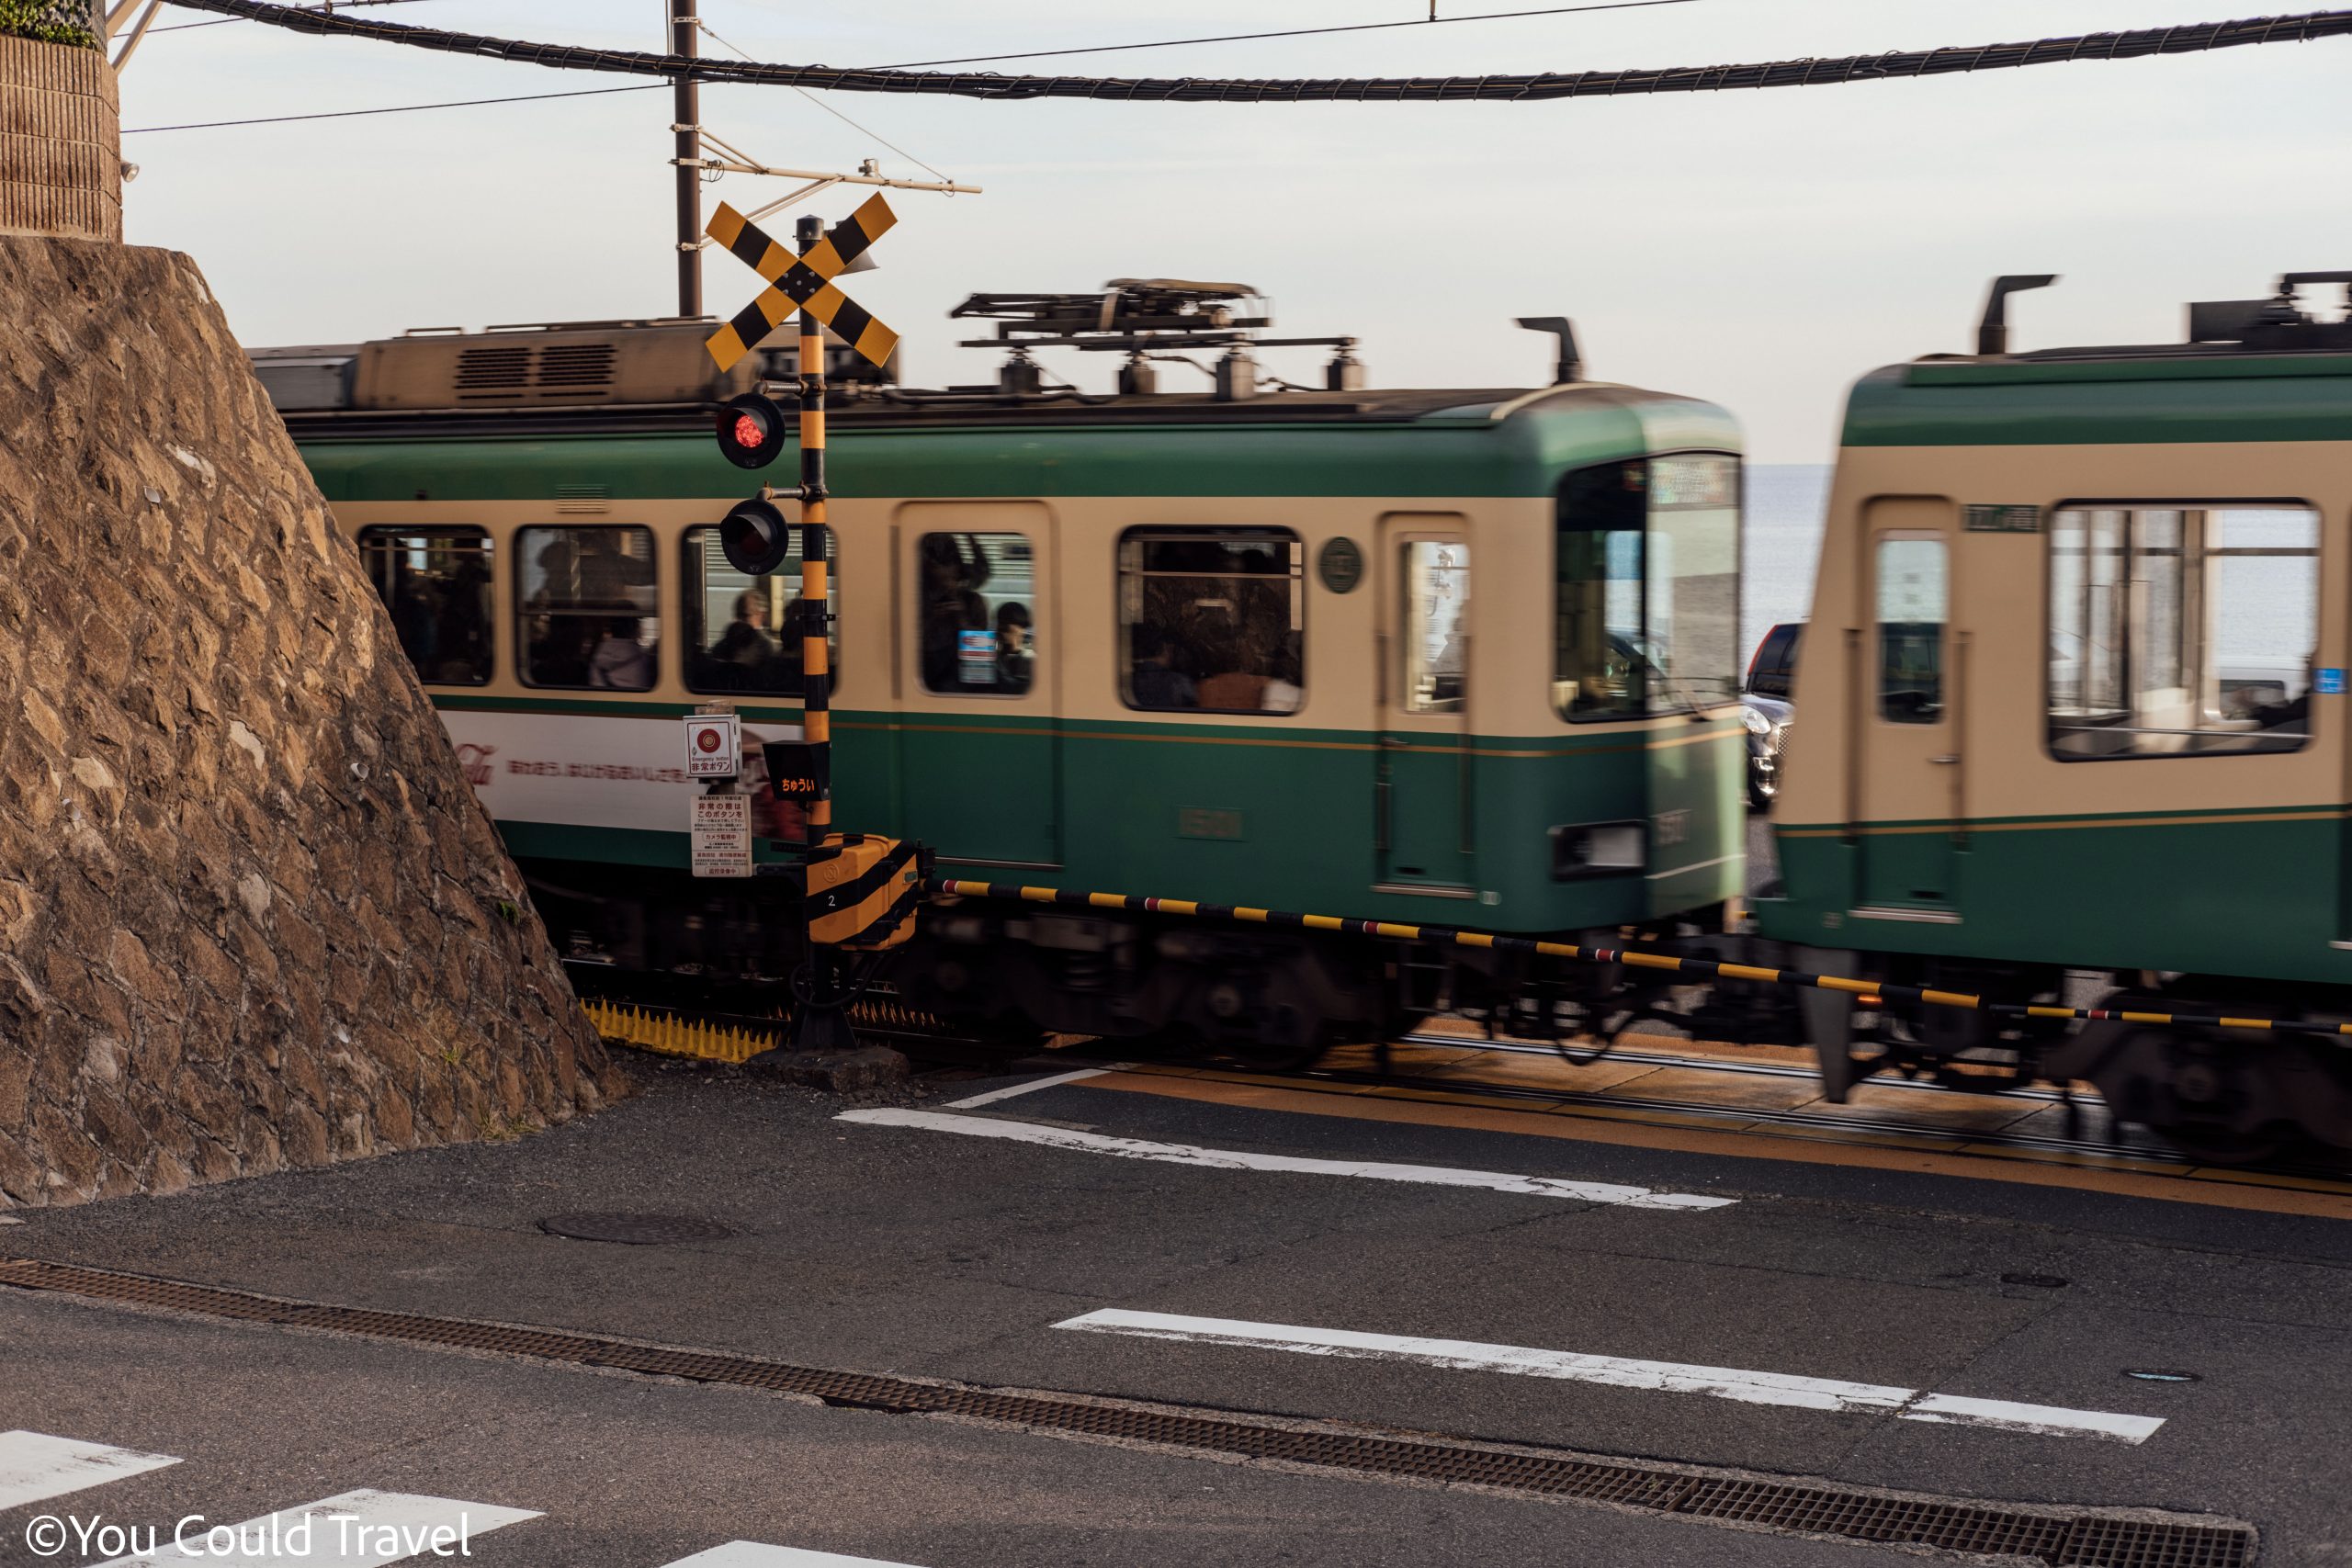 The enoden train line before the Kamakurakōkōmae Station station